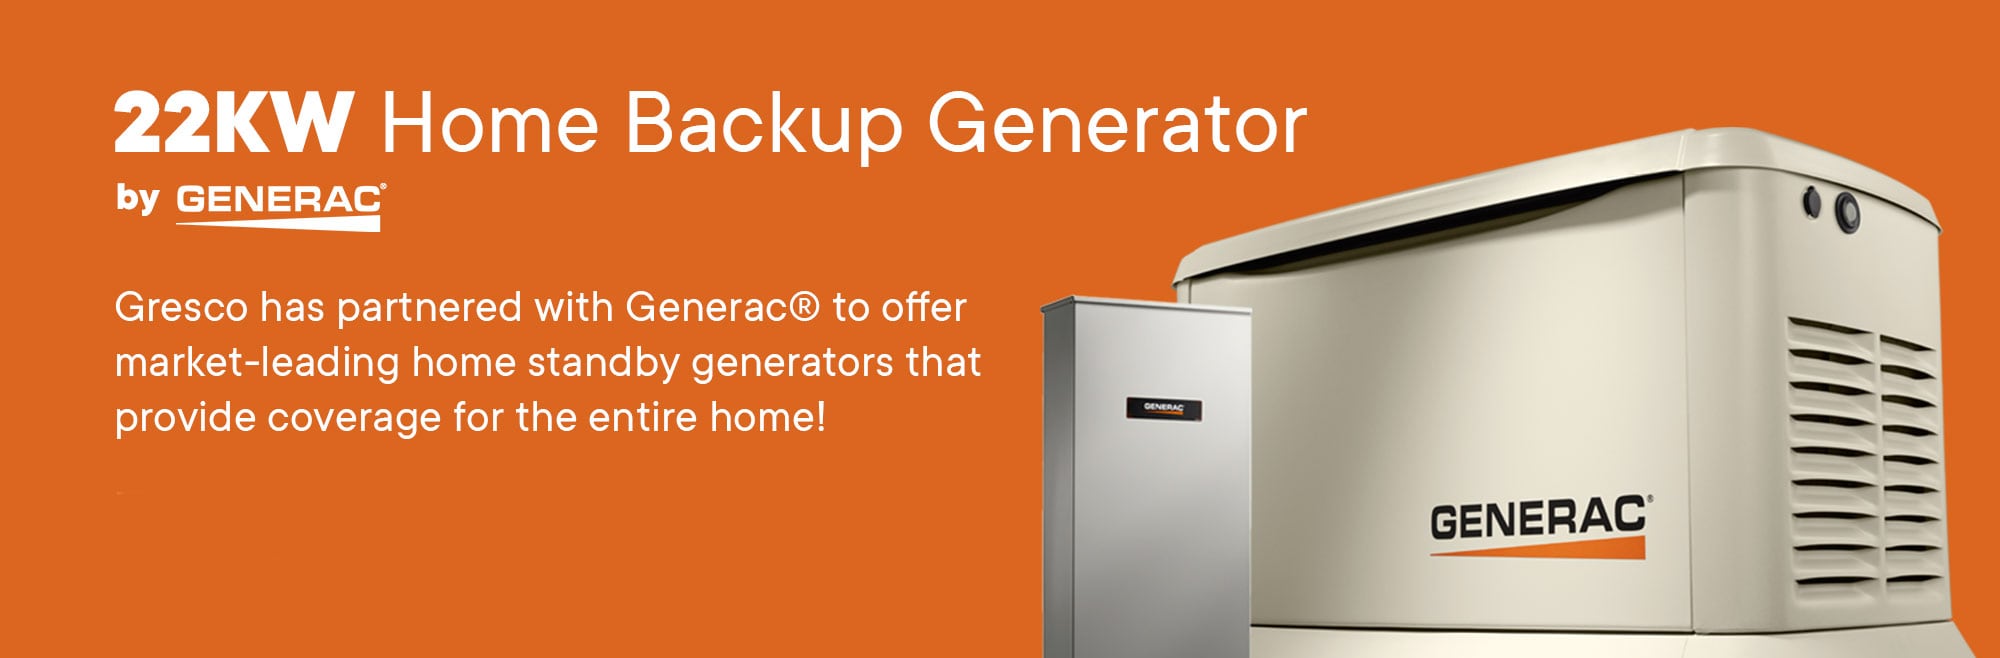 22KW Home Backup Generator by Generac